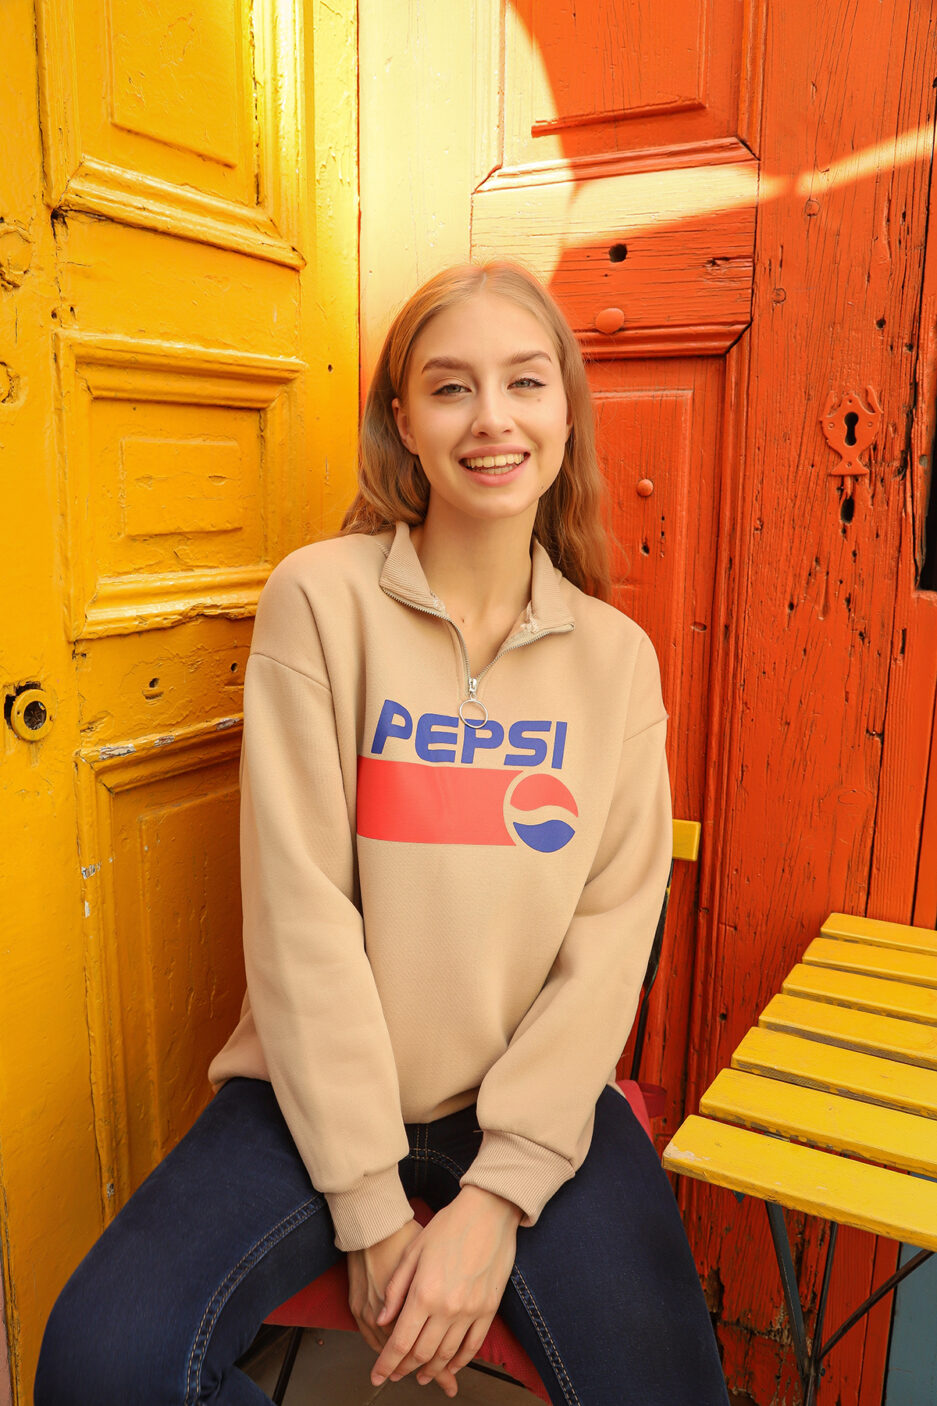 Pepsi Sweatshirt for Women's